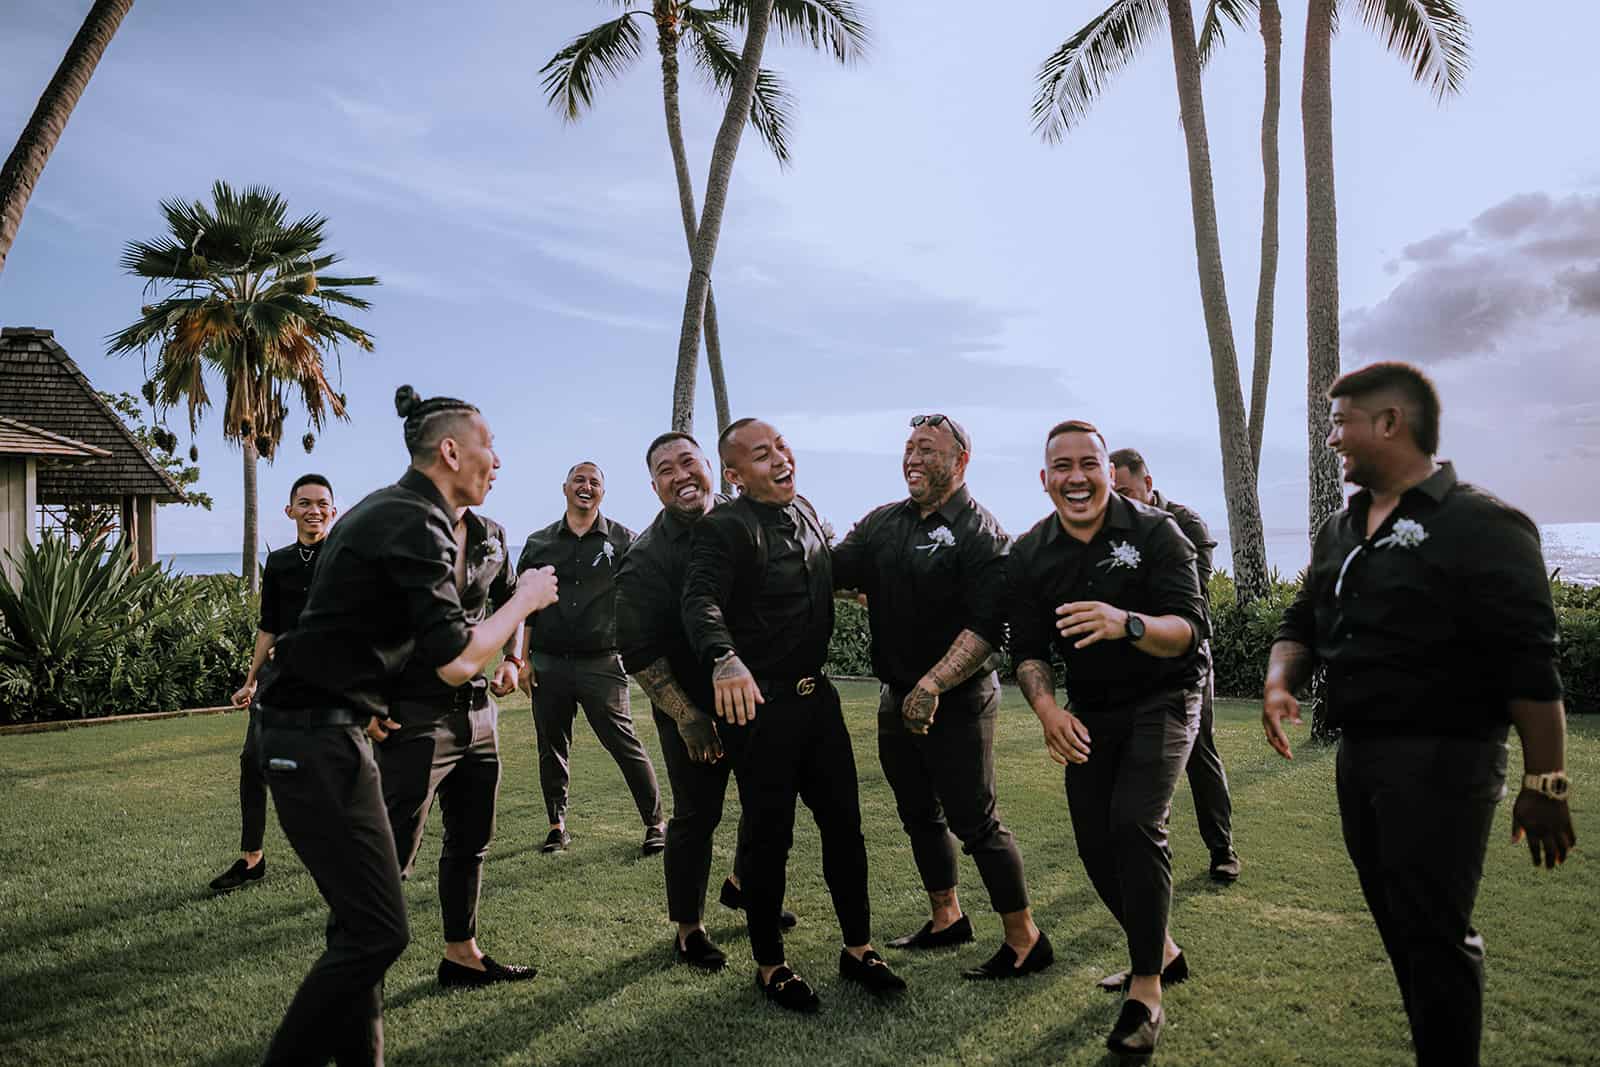 LANIKUHONUA: Oahu hawaii wedding venue